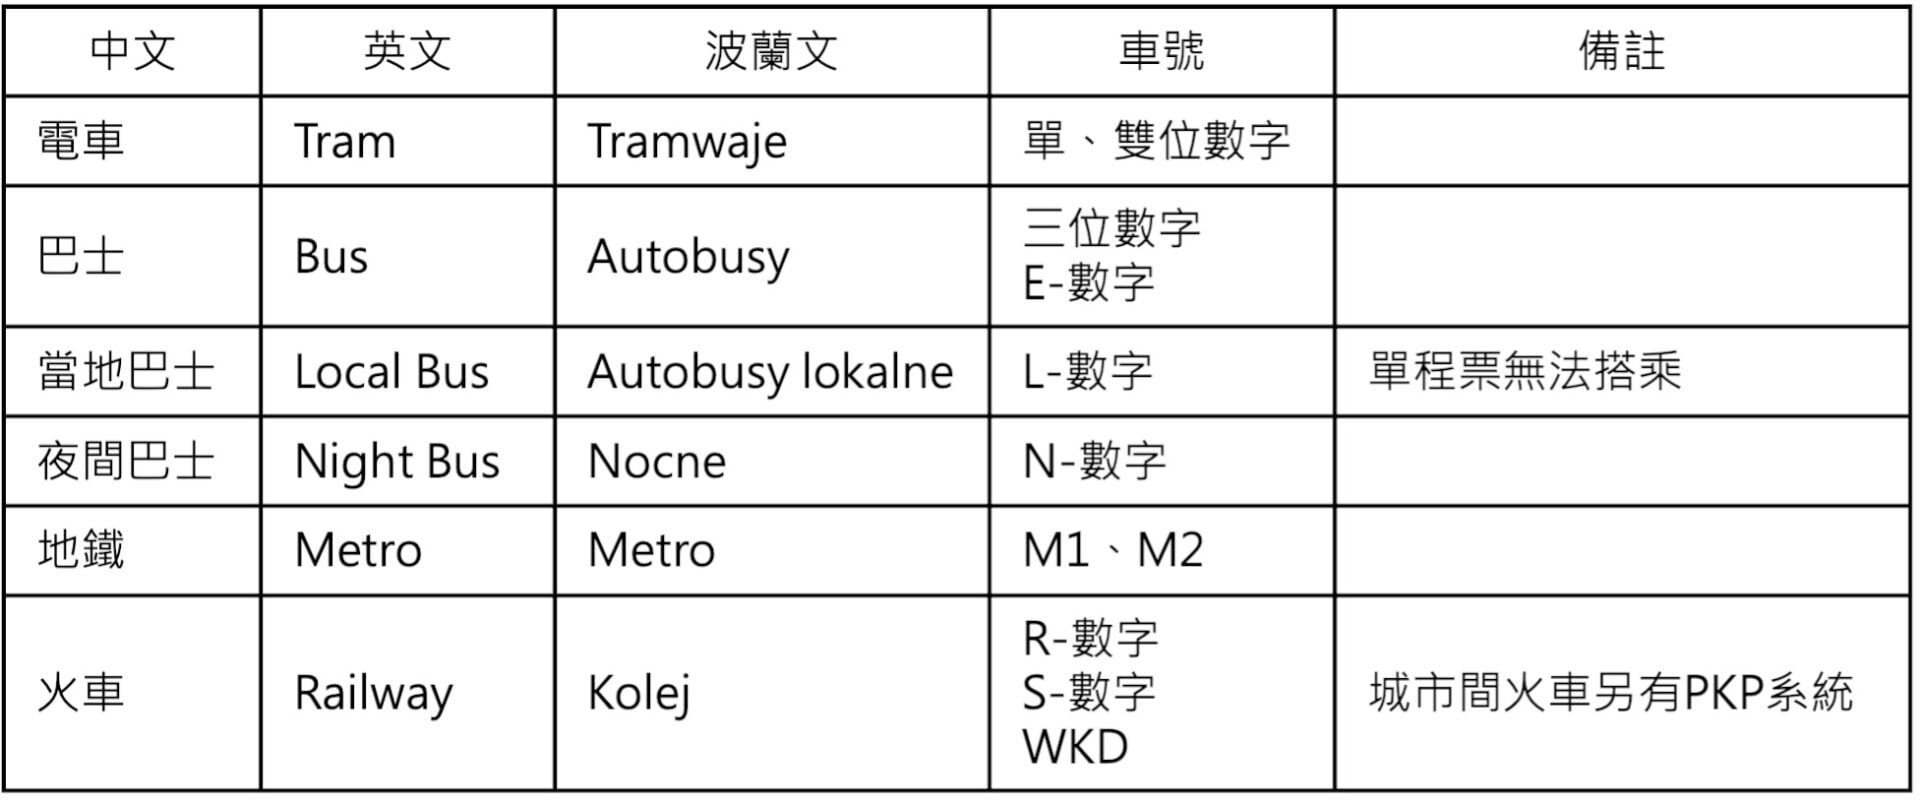 ZTM大眾運輸名稱對照表